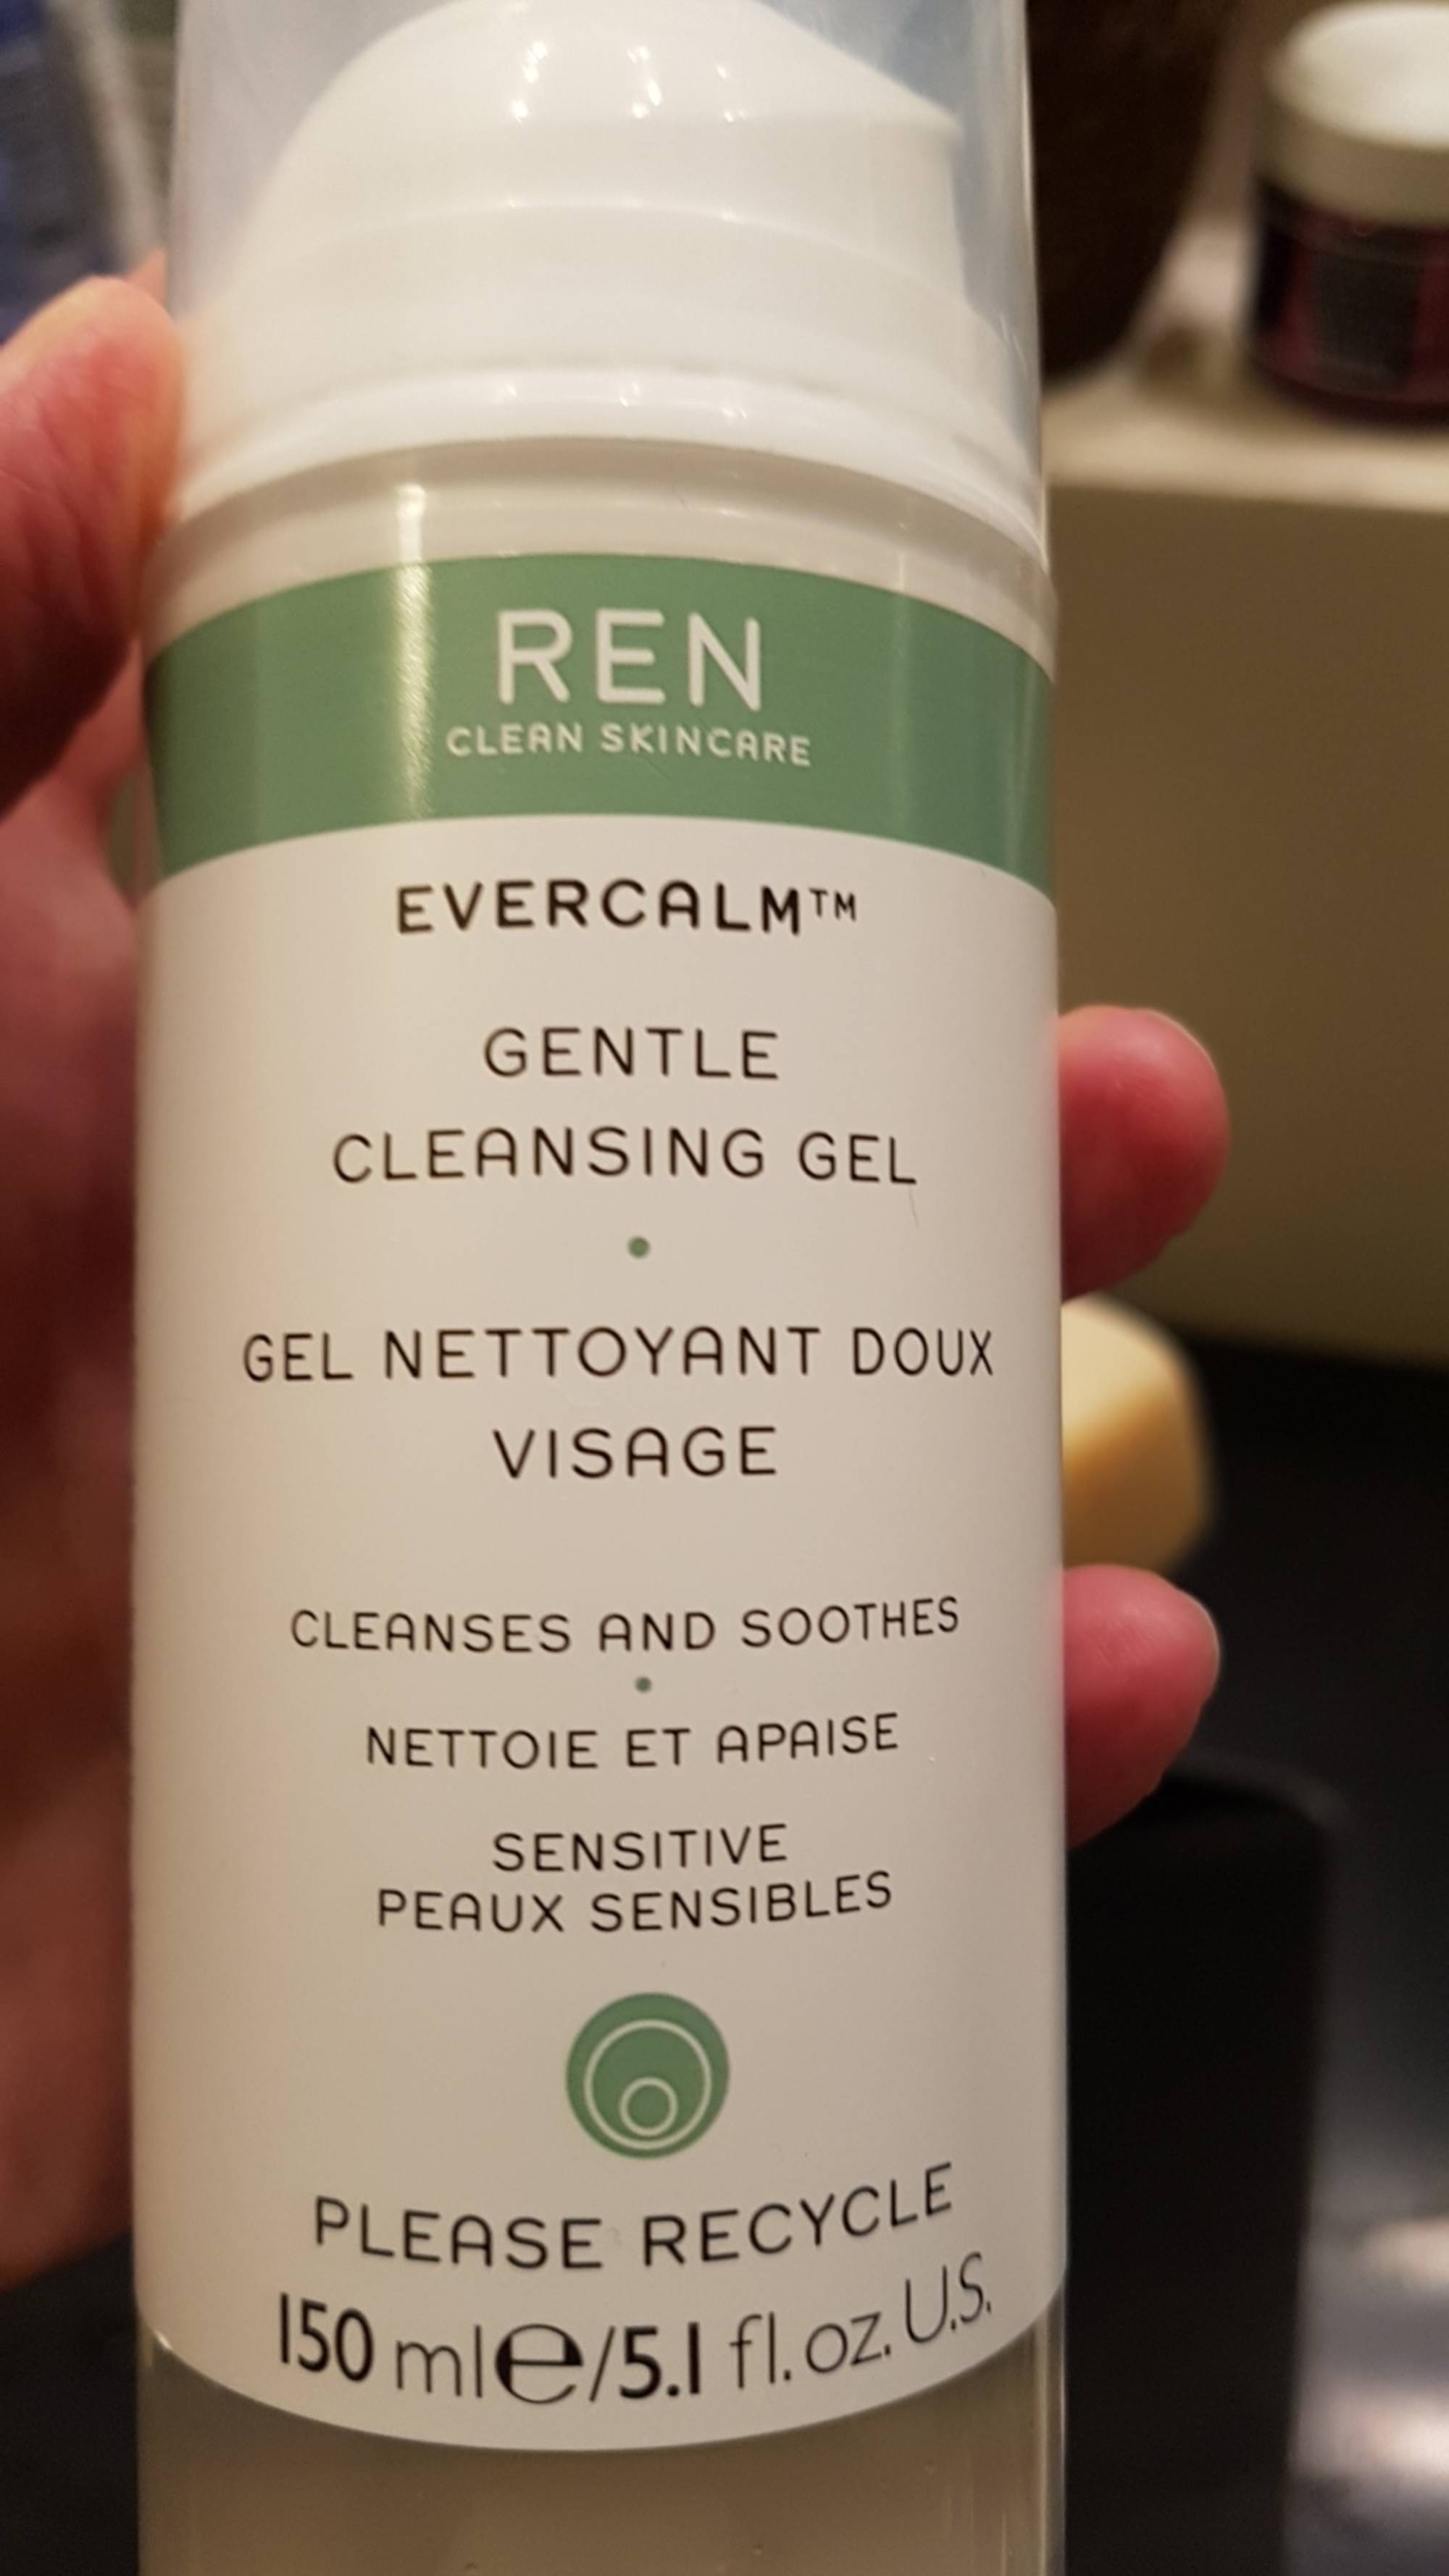 REN CLEAN SKINCARE - Evercalm - Gel nettoyant doux visage